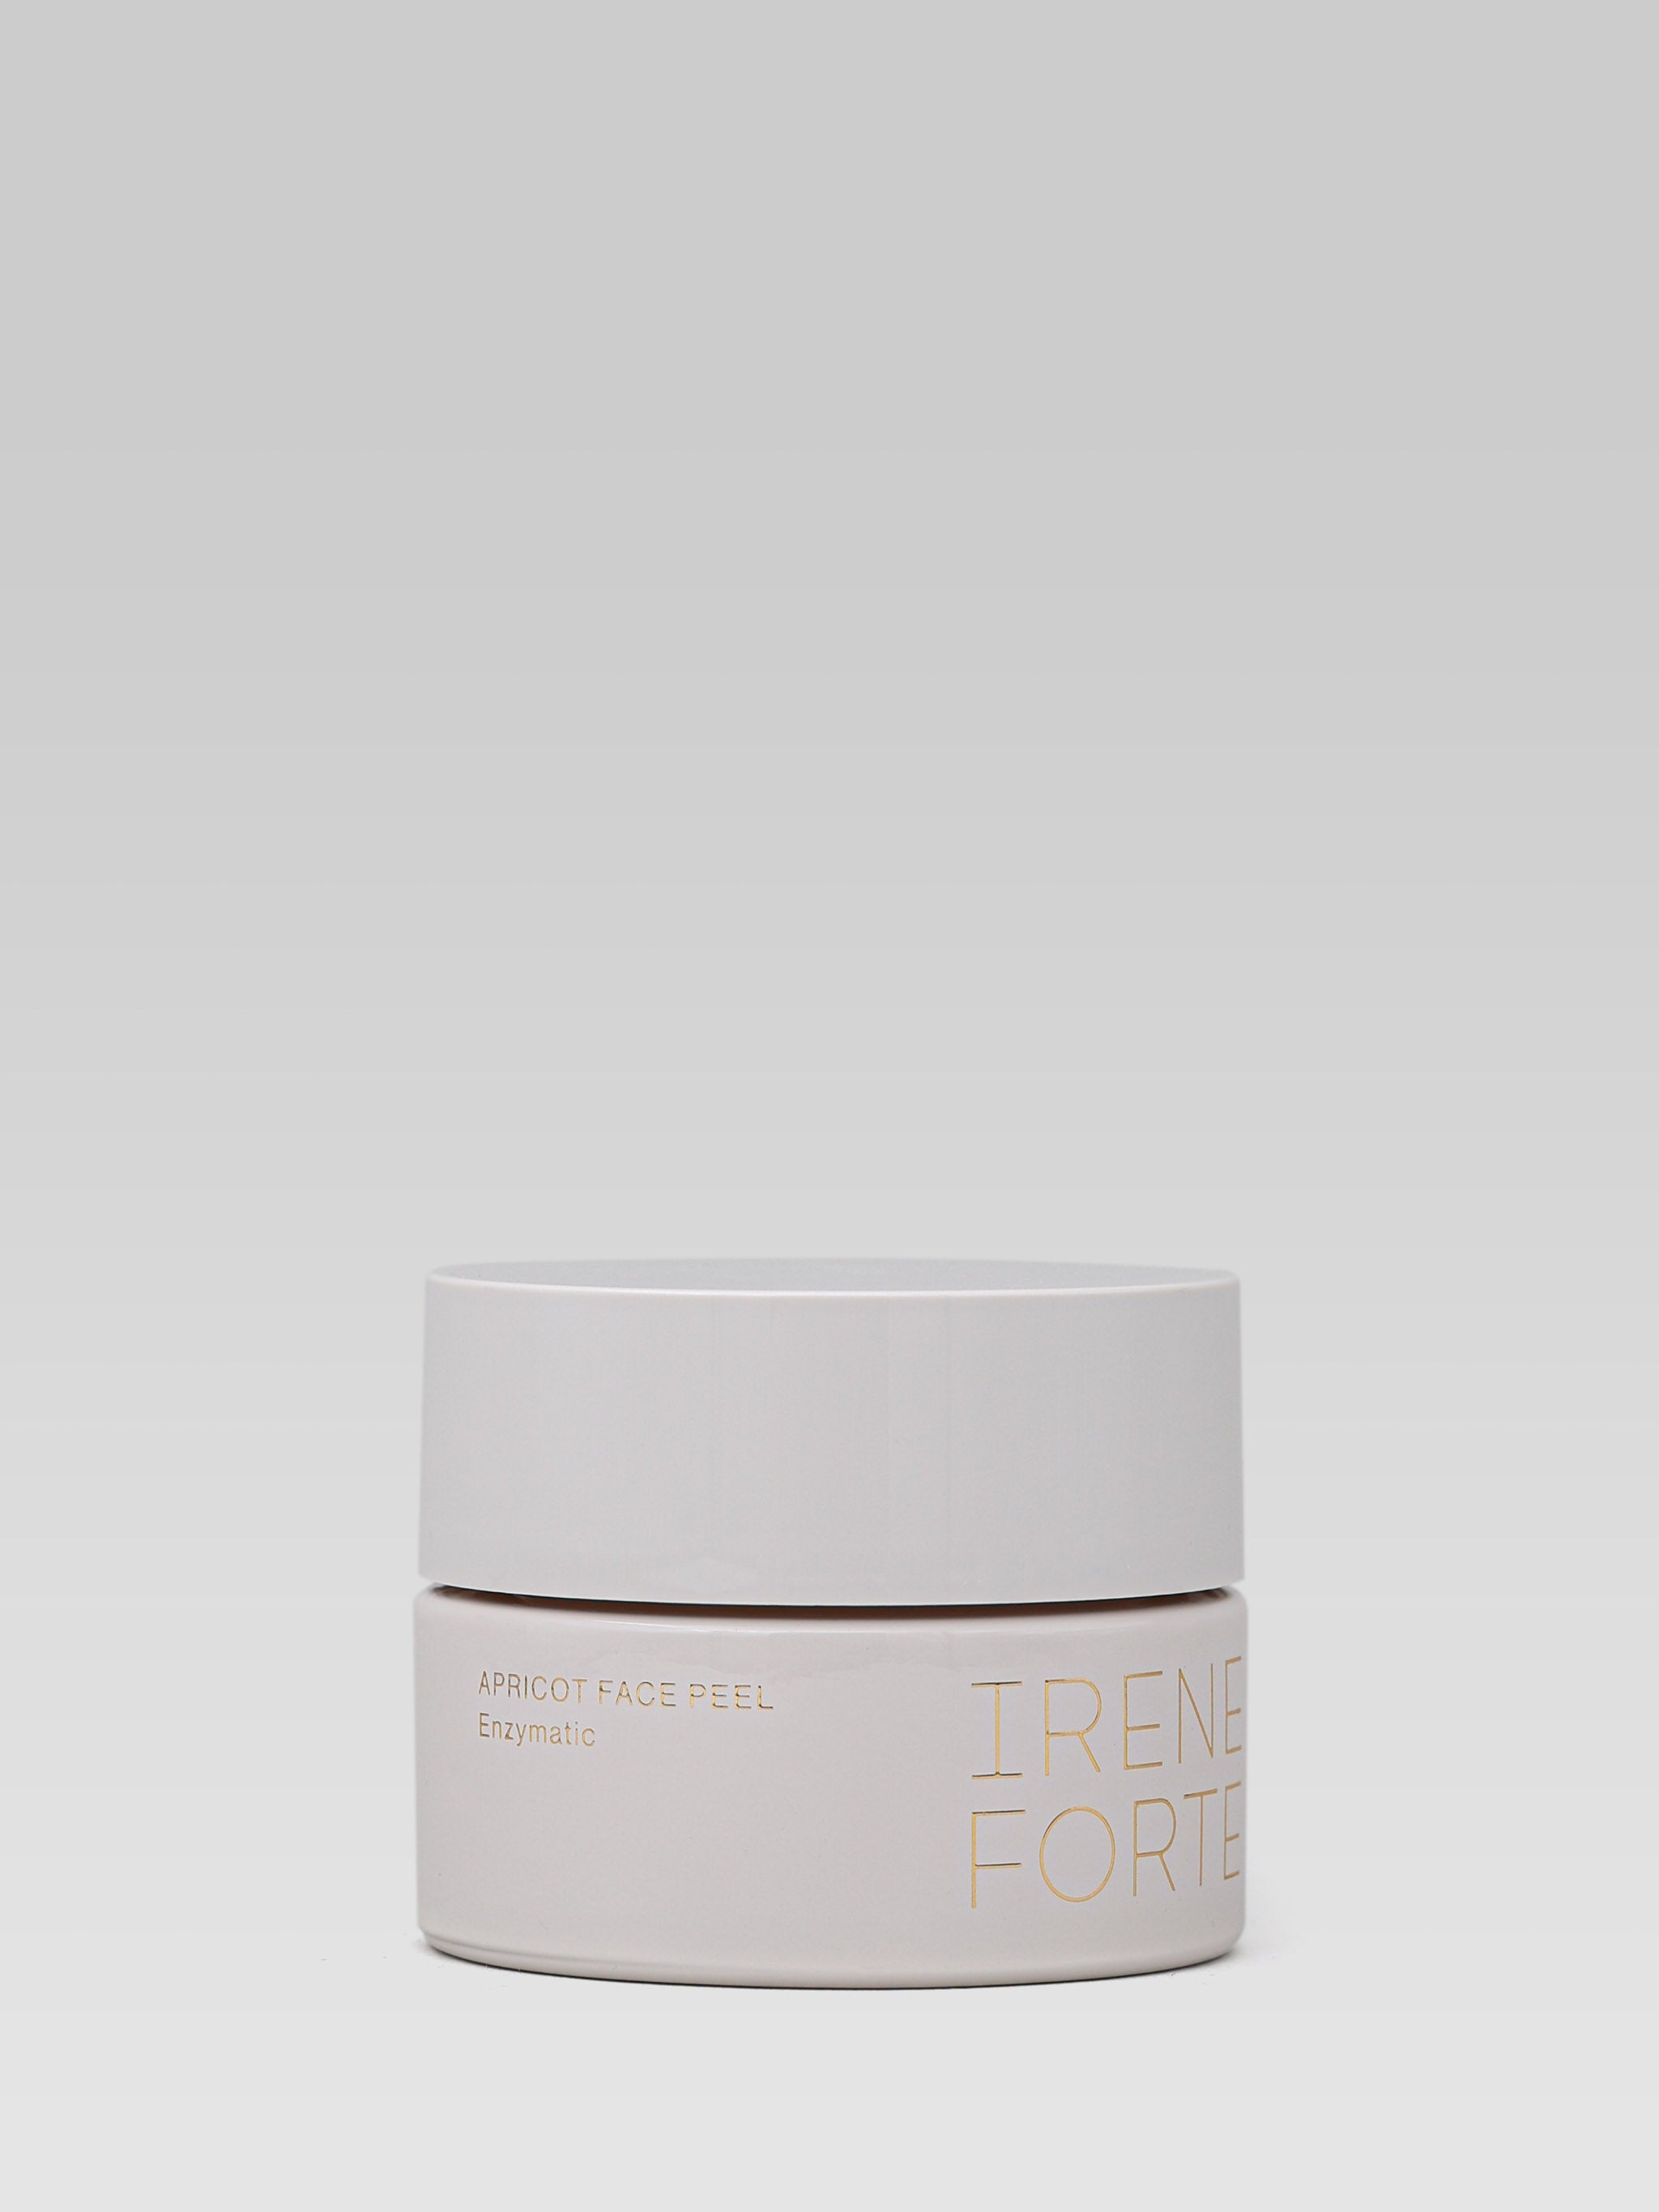 Irene Forte Apricot Face Peel product shot